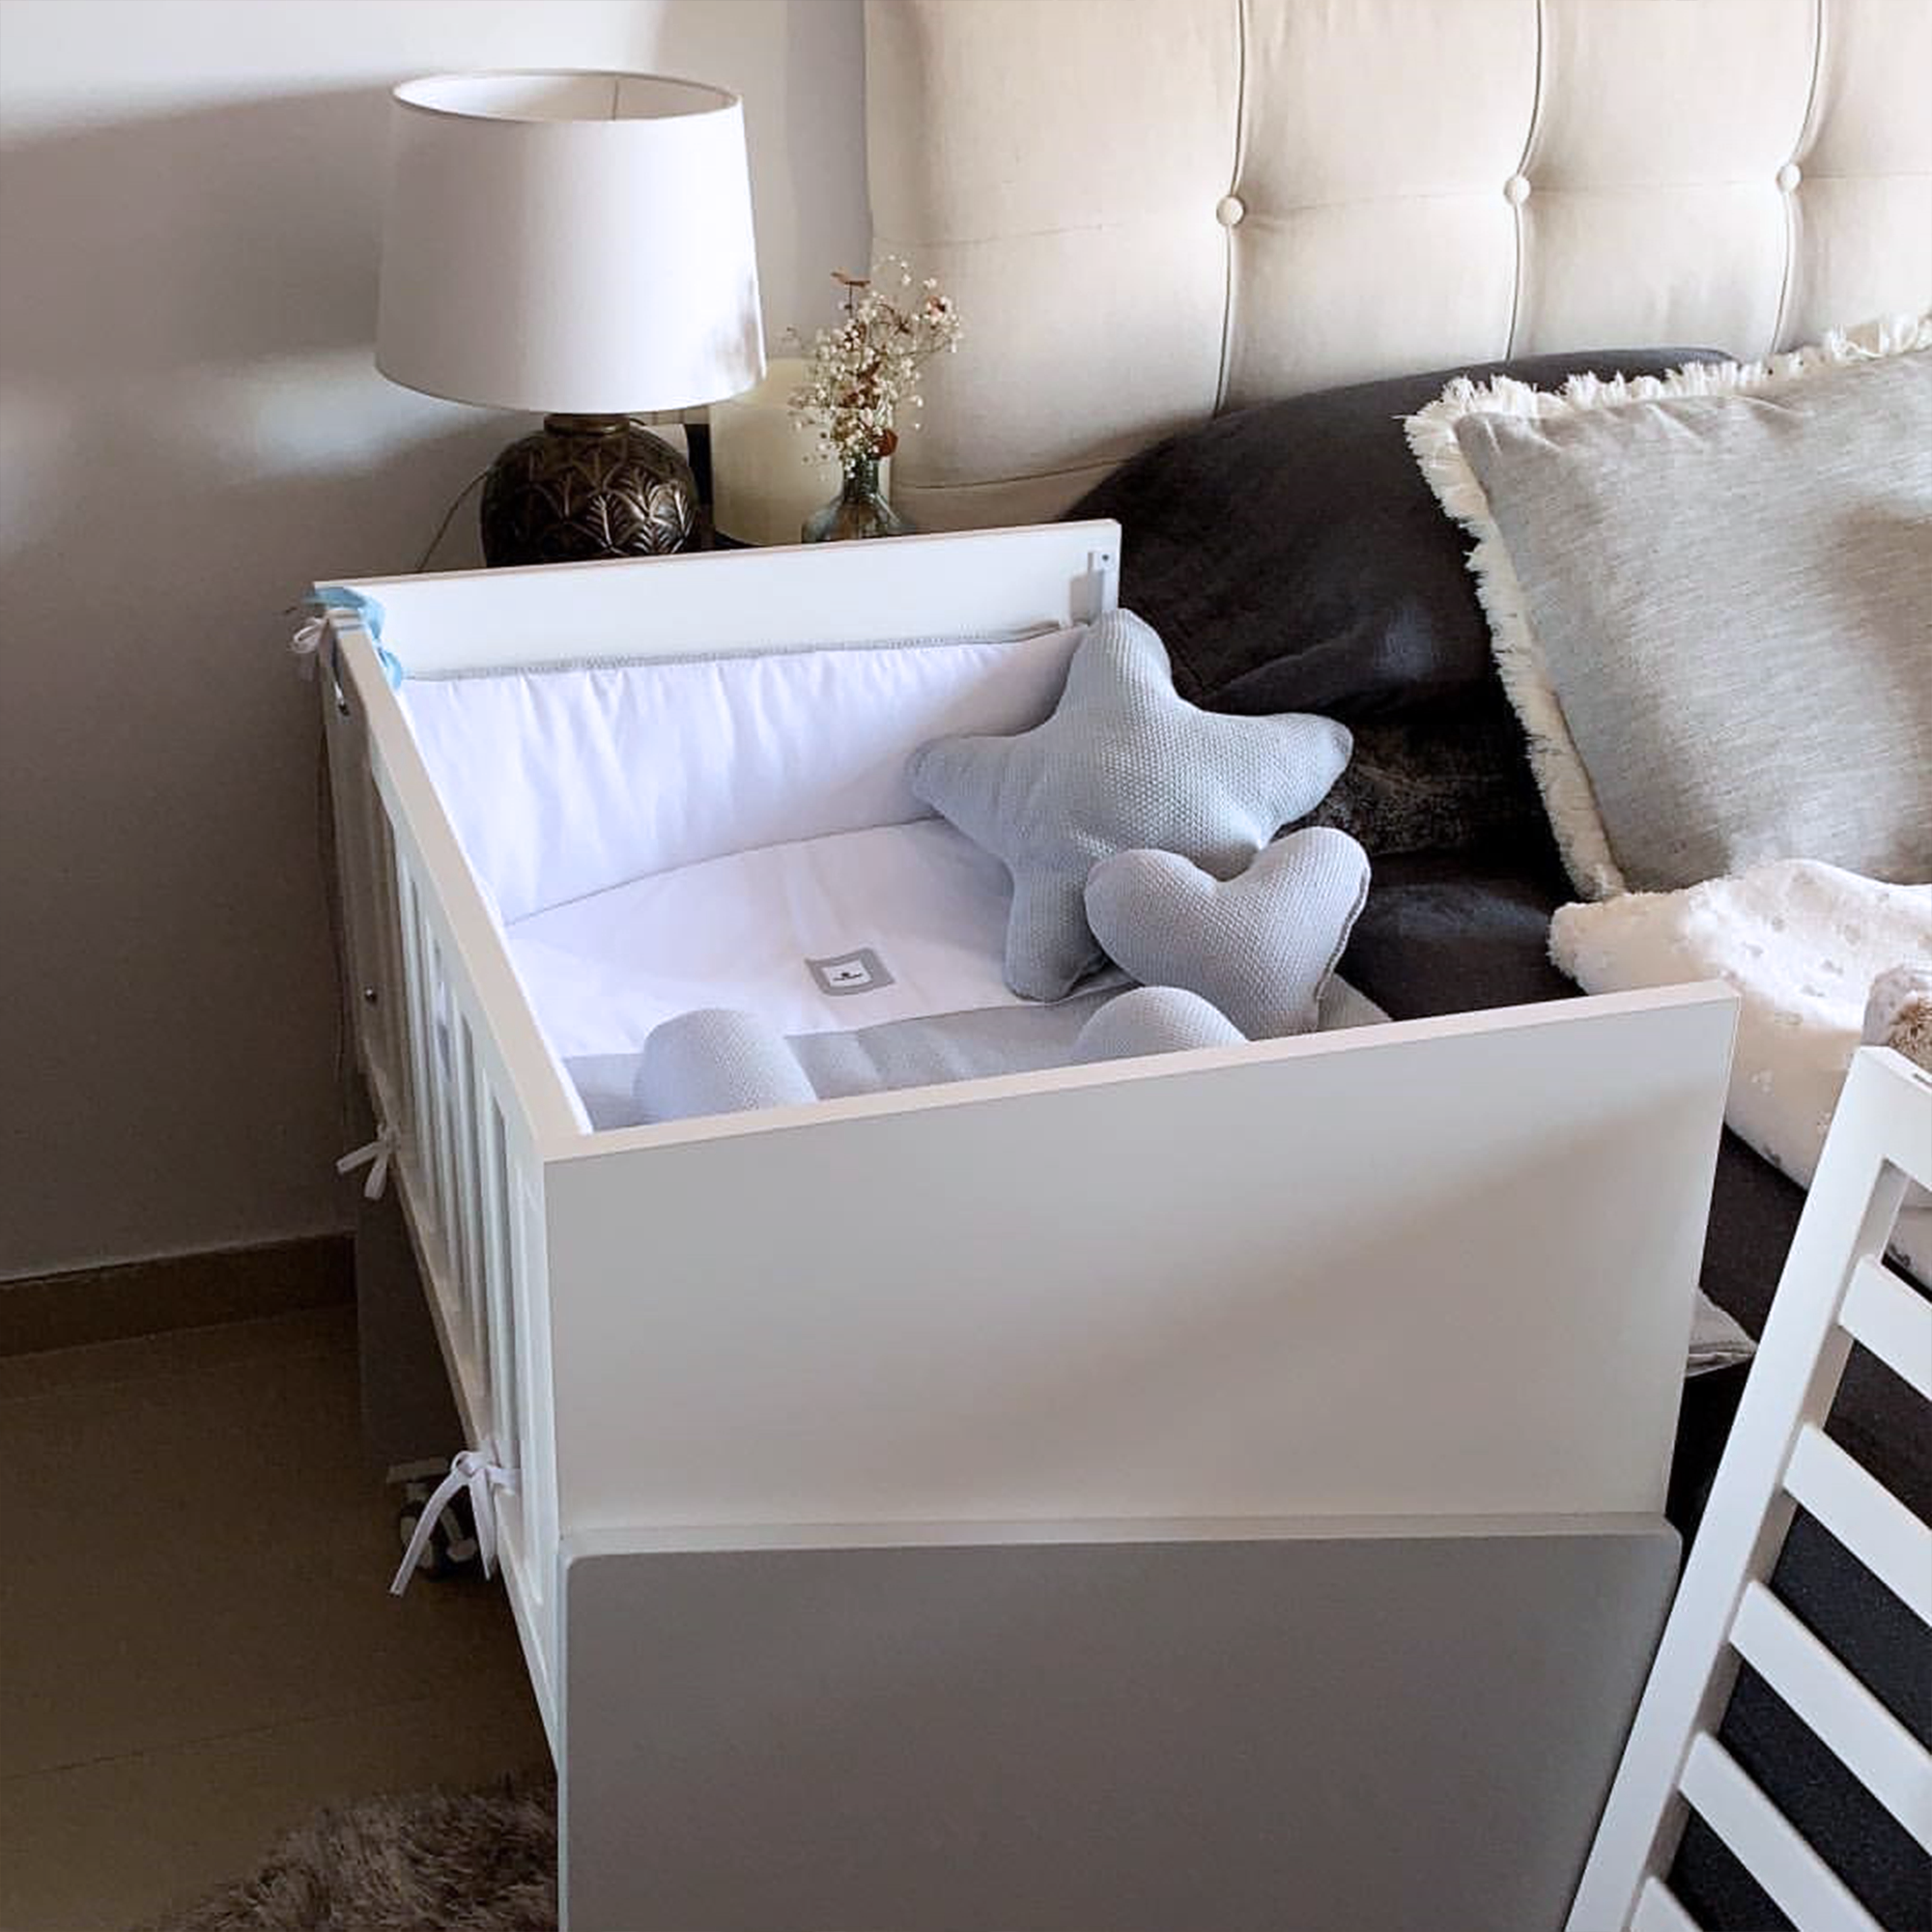 White and grey Co-sleeping crib